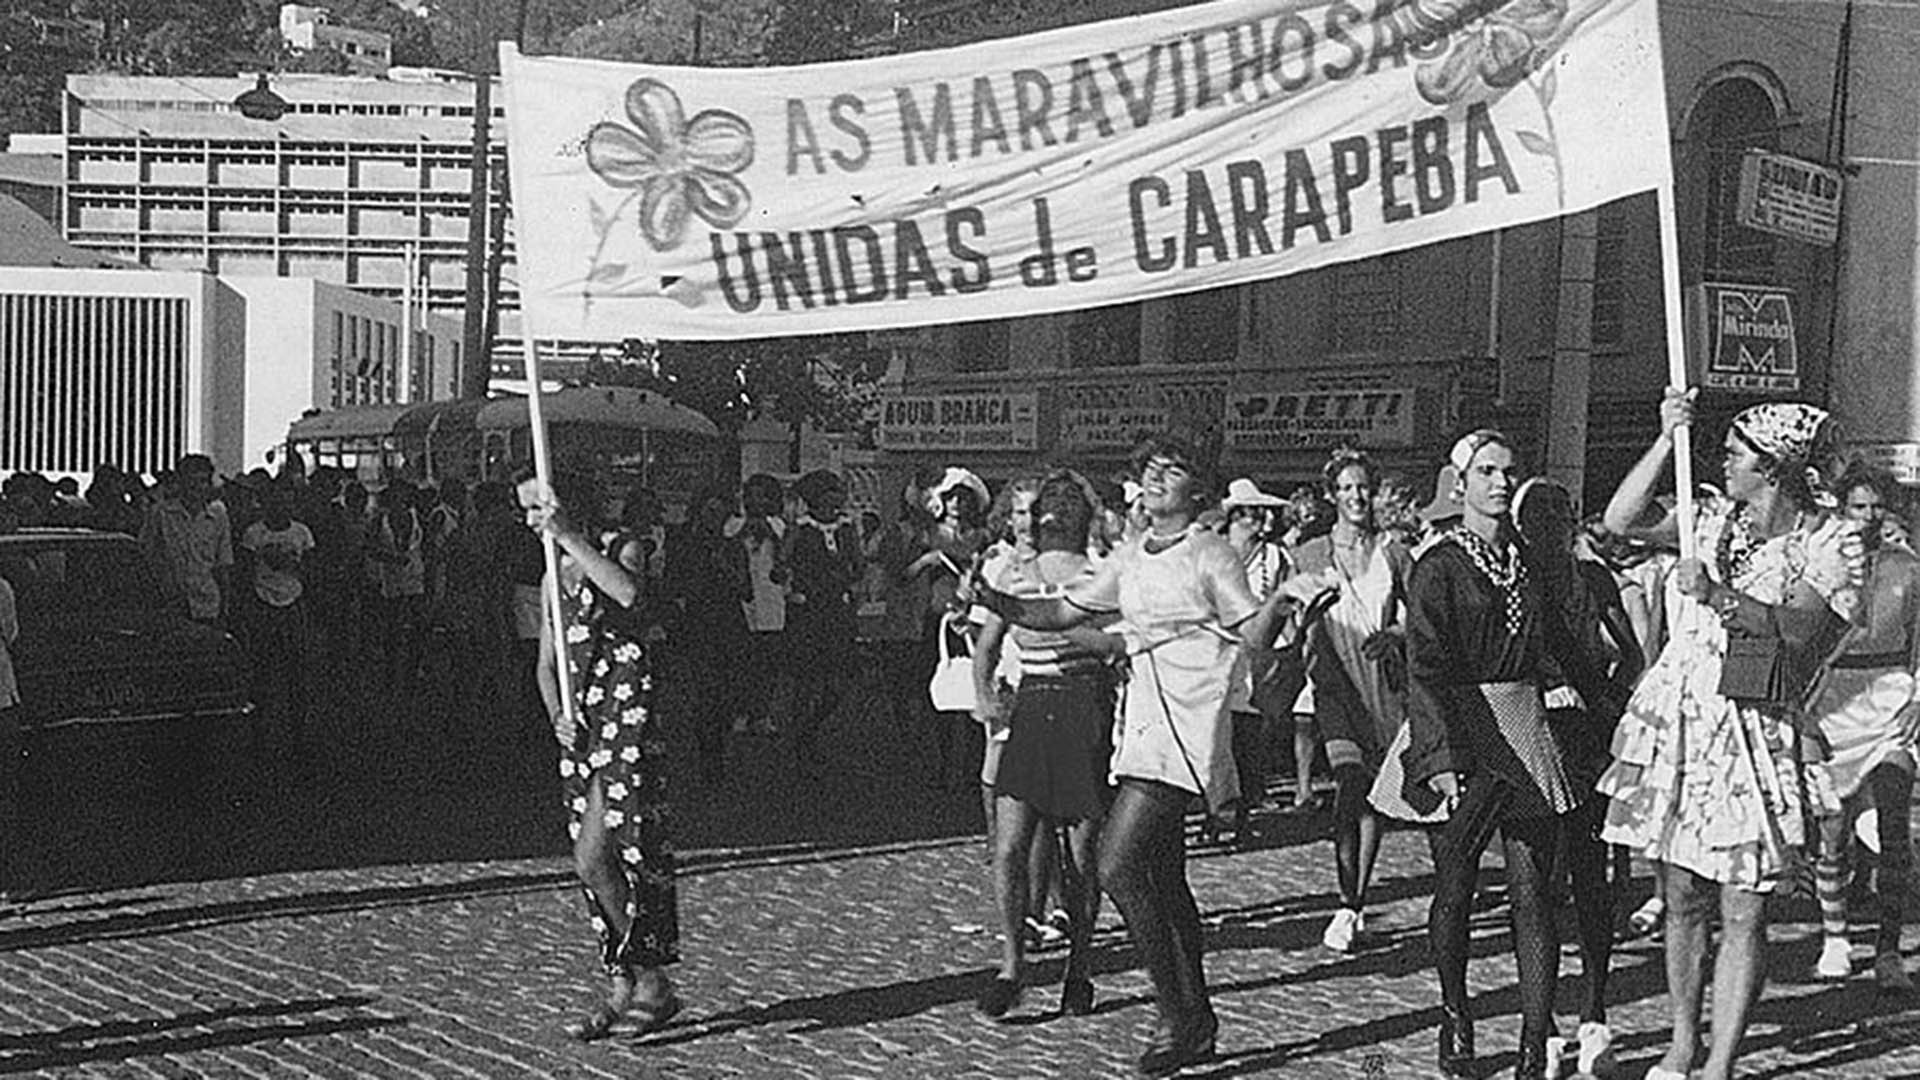 1972 - Bloco "As Maravilhosas Unidas de Carapeba" 